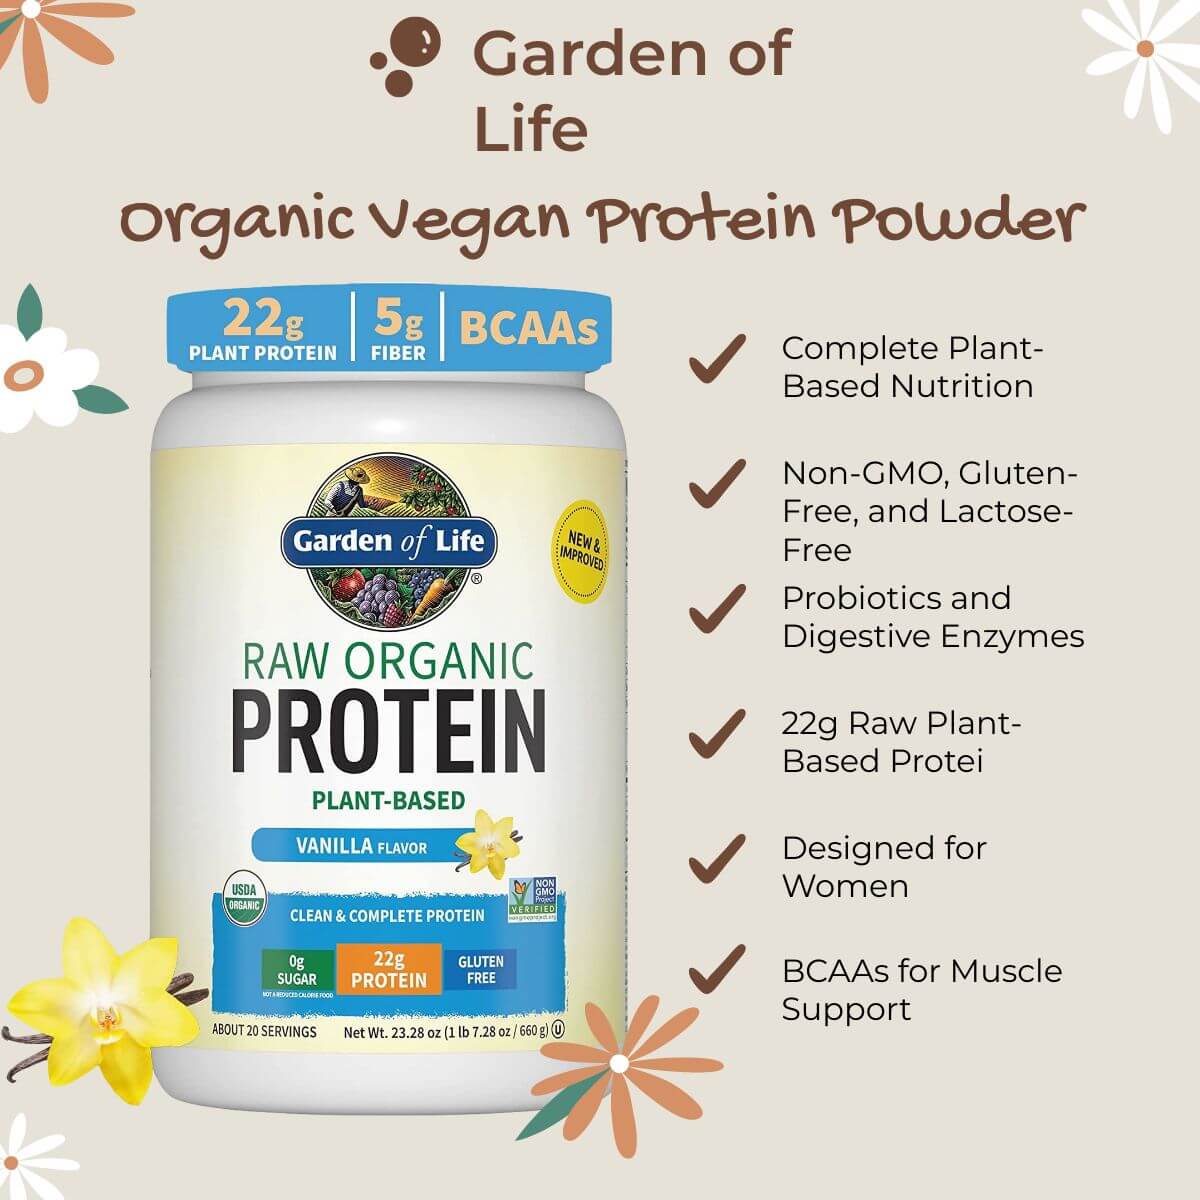 Garden of Life Raw Organic Protein- Women's Top Vegan Protein Powders